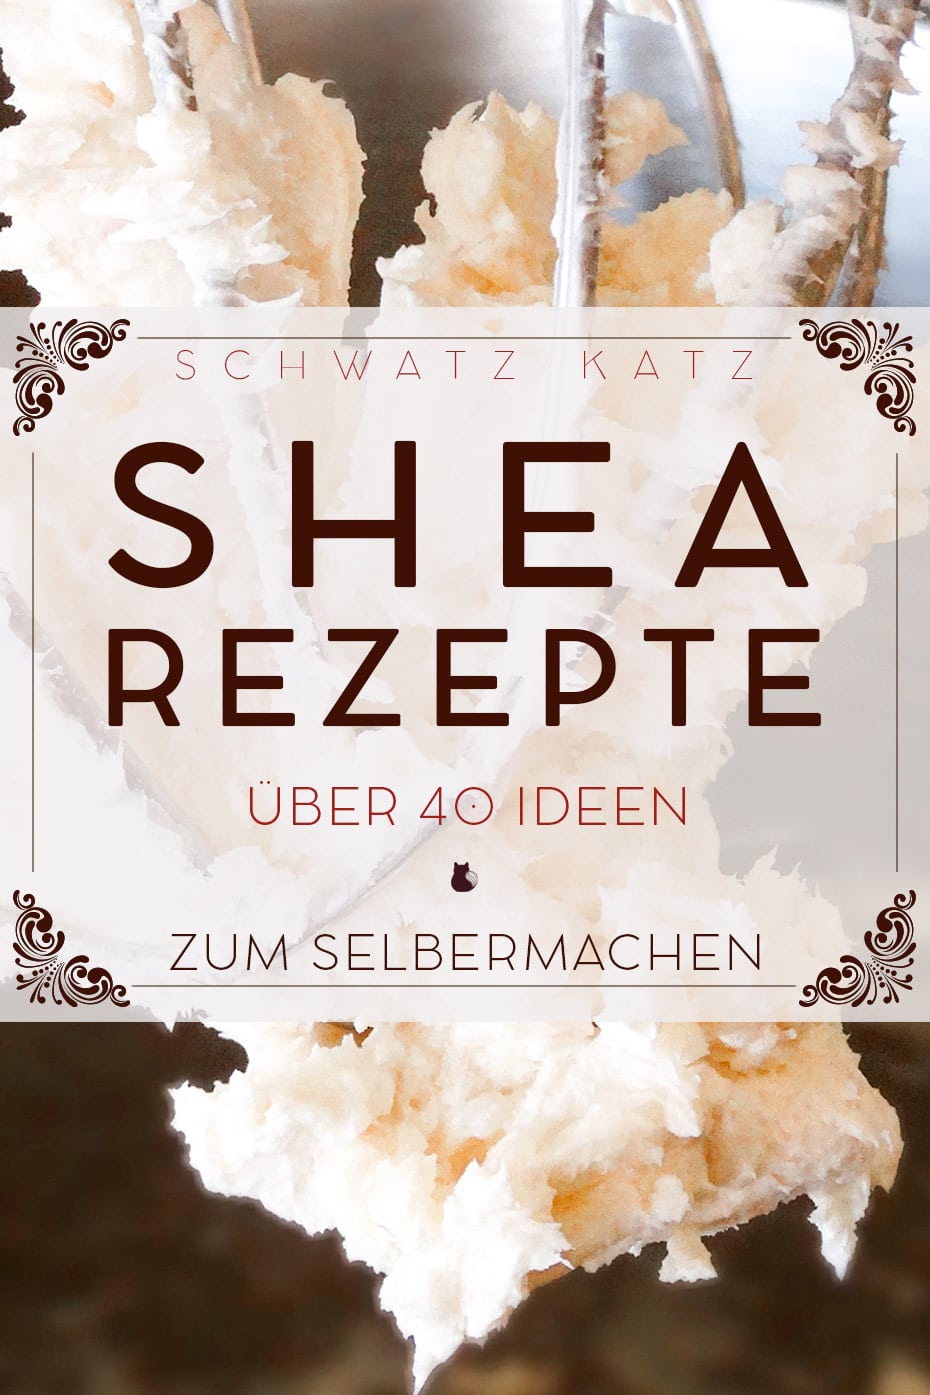 40 + Beauty Rezepte mit Sheabutter | Schwatz Katz